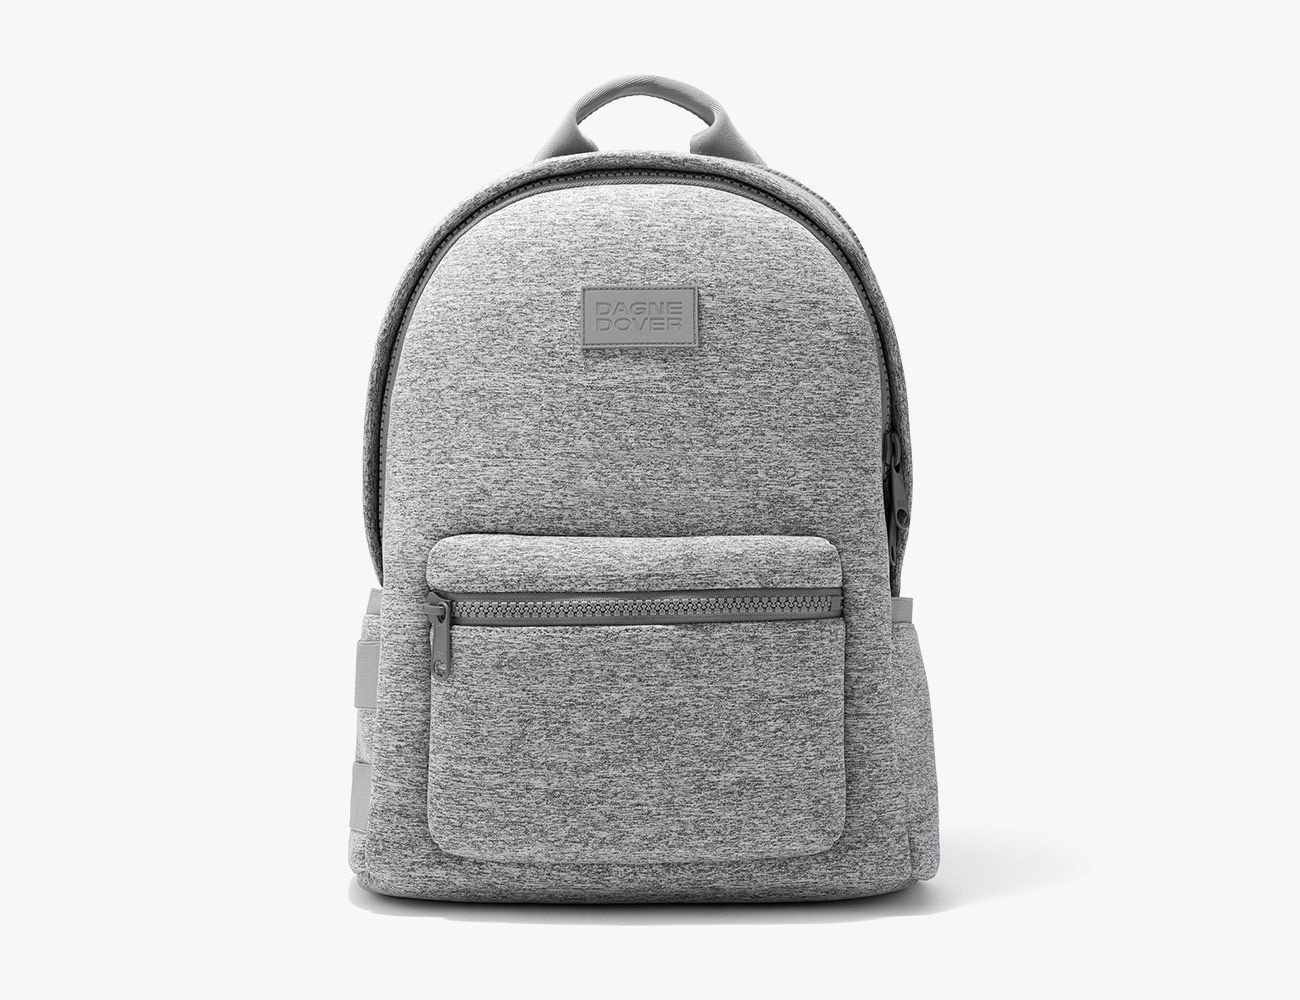 Da-Nga-Nro-Npa Laptop Backpack Durable College Daypack School Bag For Student 